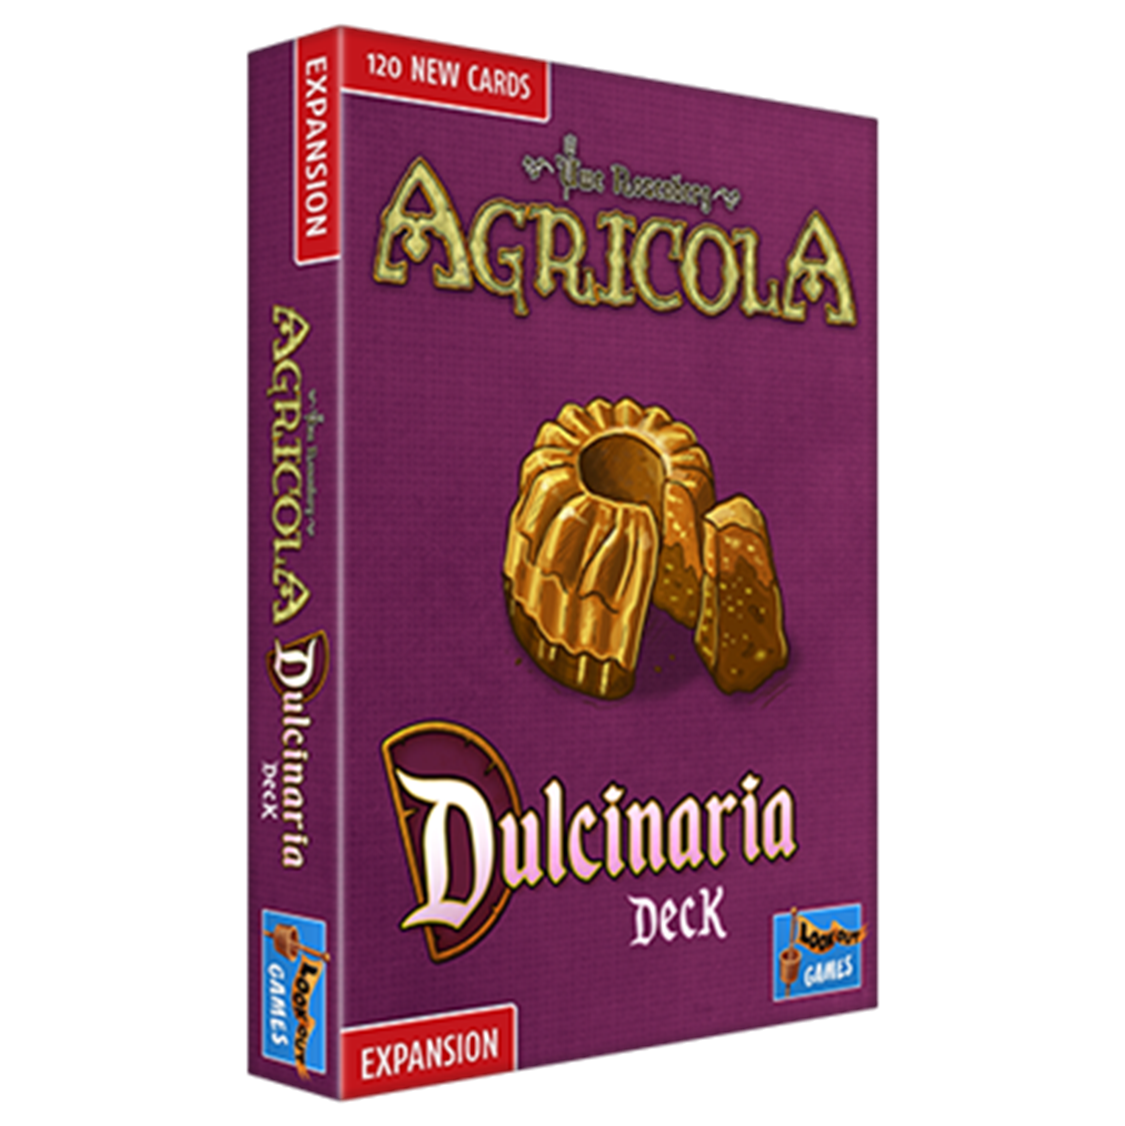 Agricola: Dulcinaria Deck Expansion